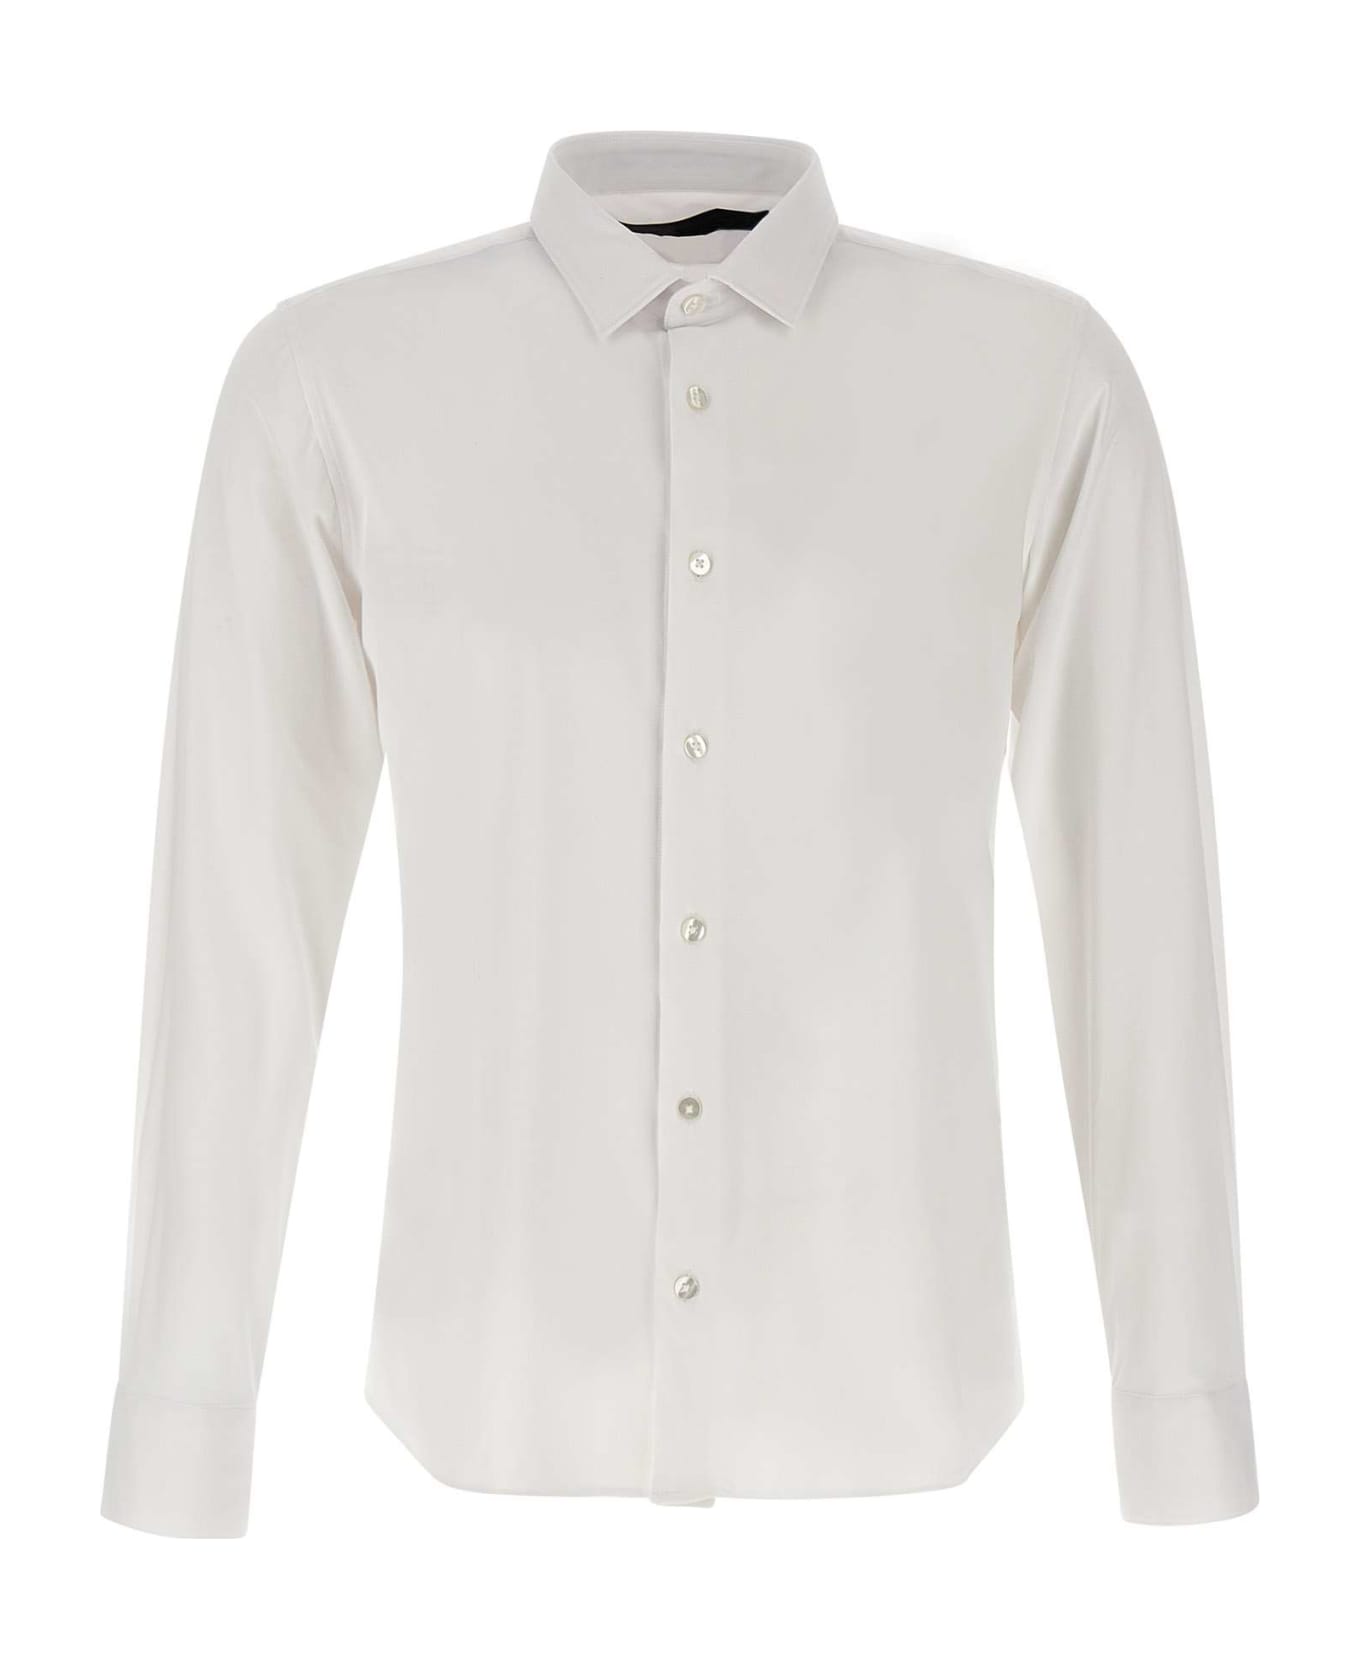 RRD - Roberto Ricci Design "oxford Open" Shirt - WHITE シャツ